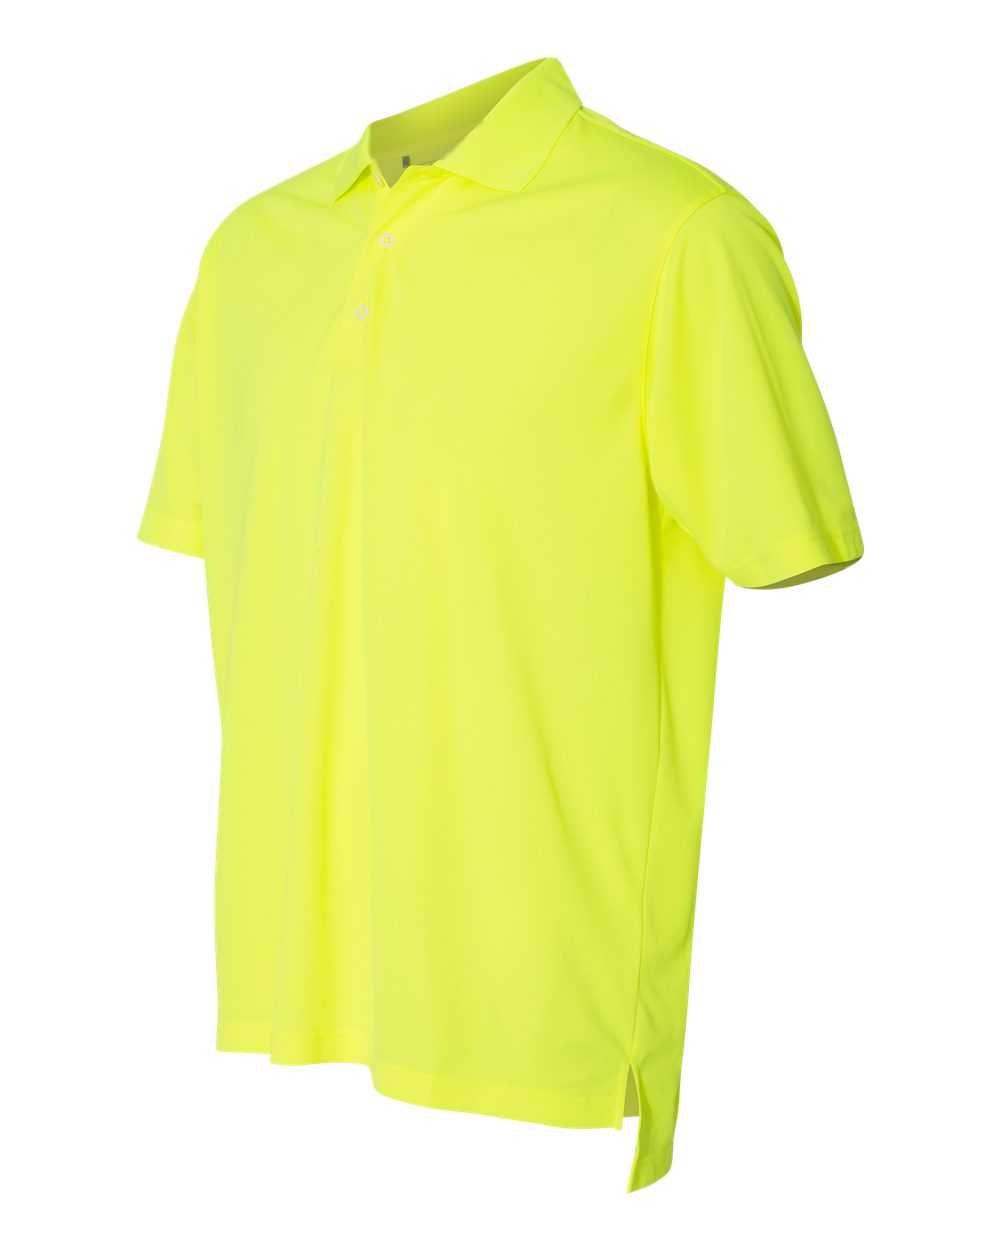 Adidas A130 Basic Sport Shirt - Solar Yellow White